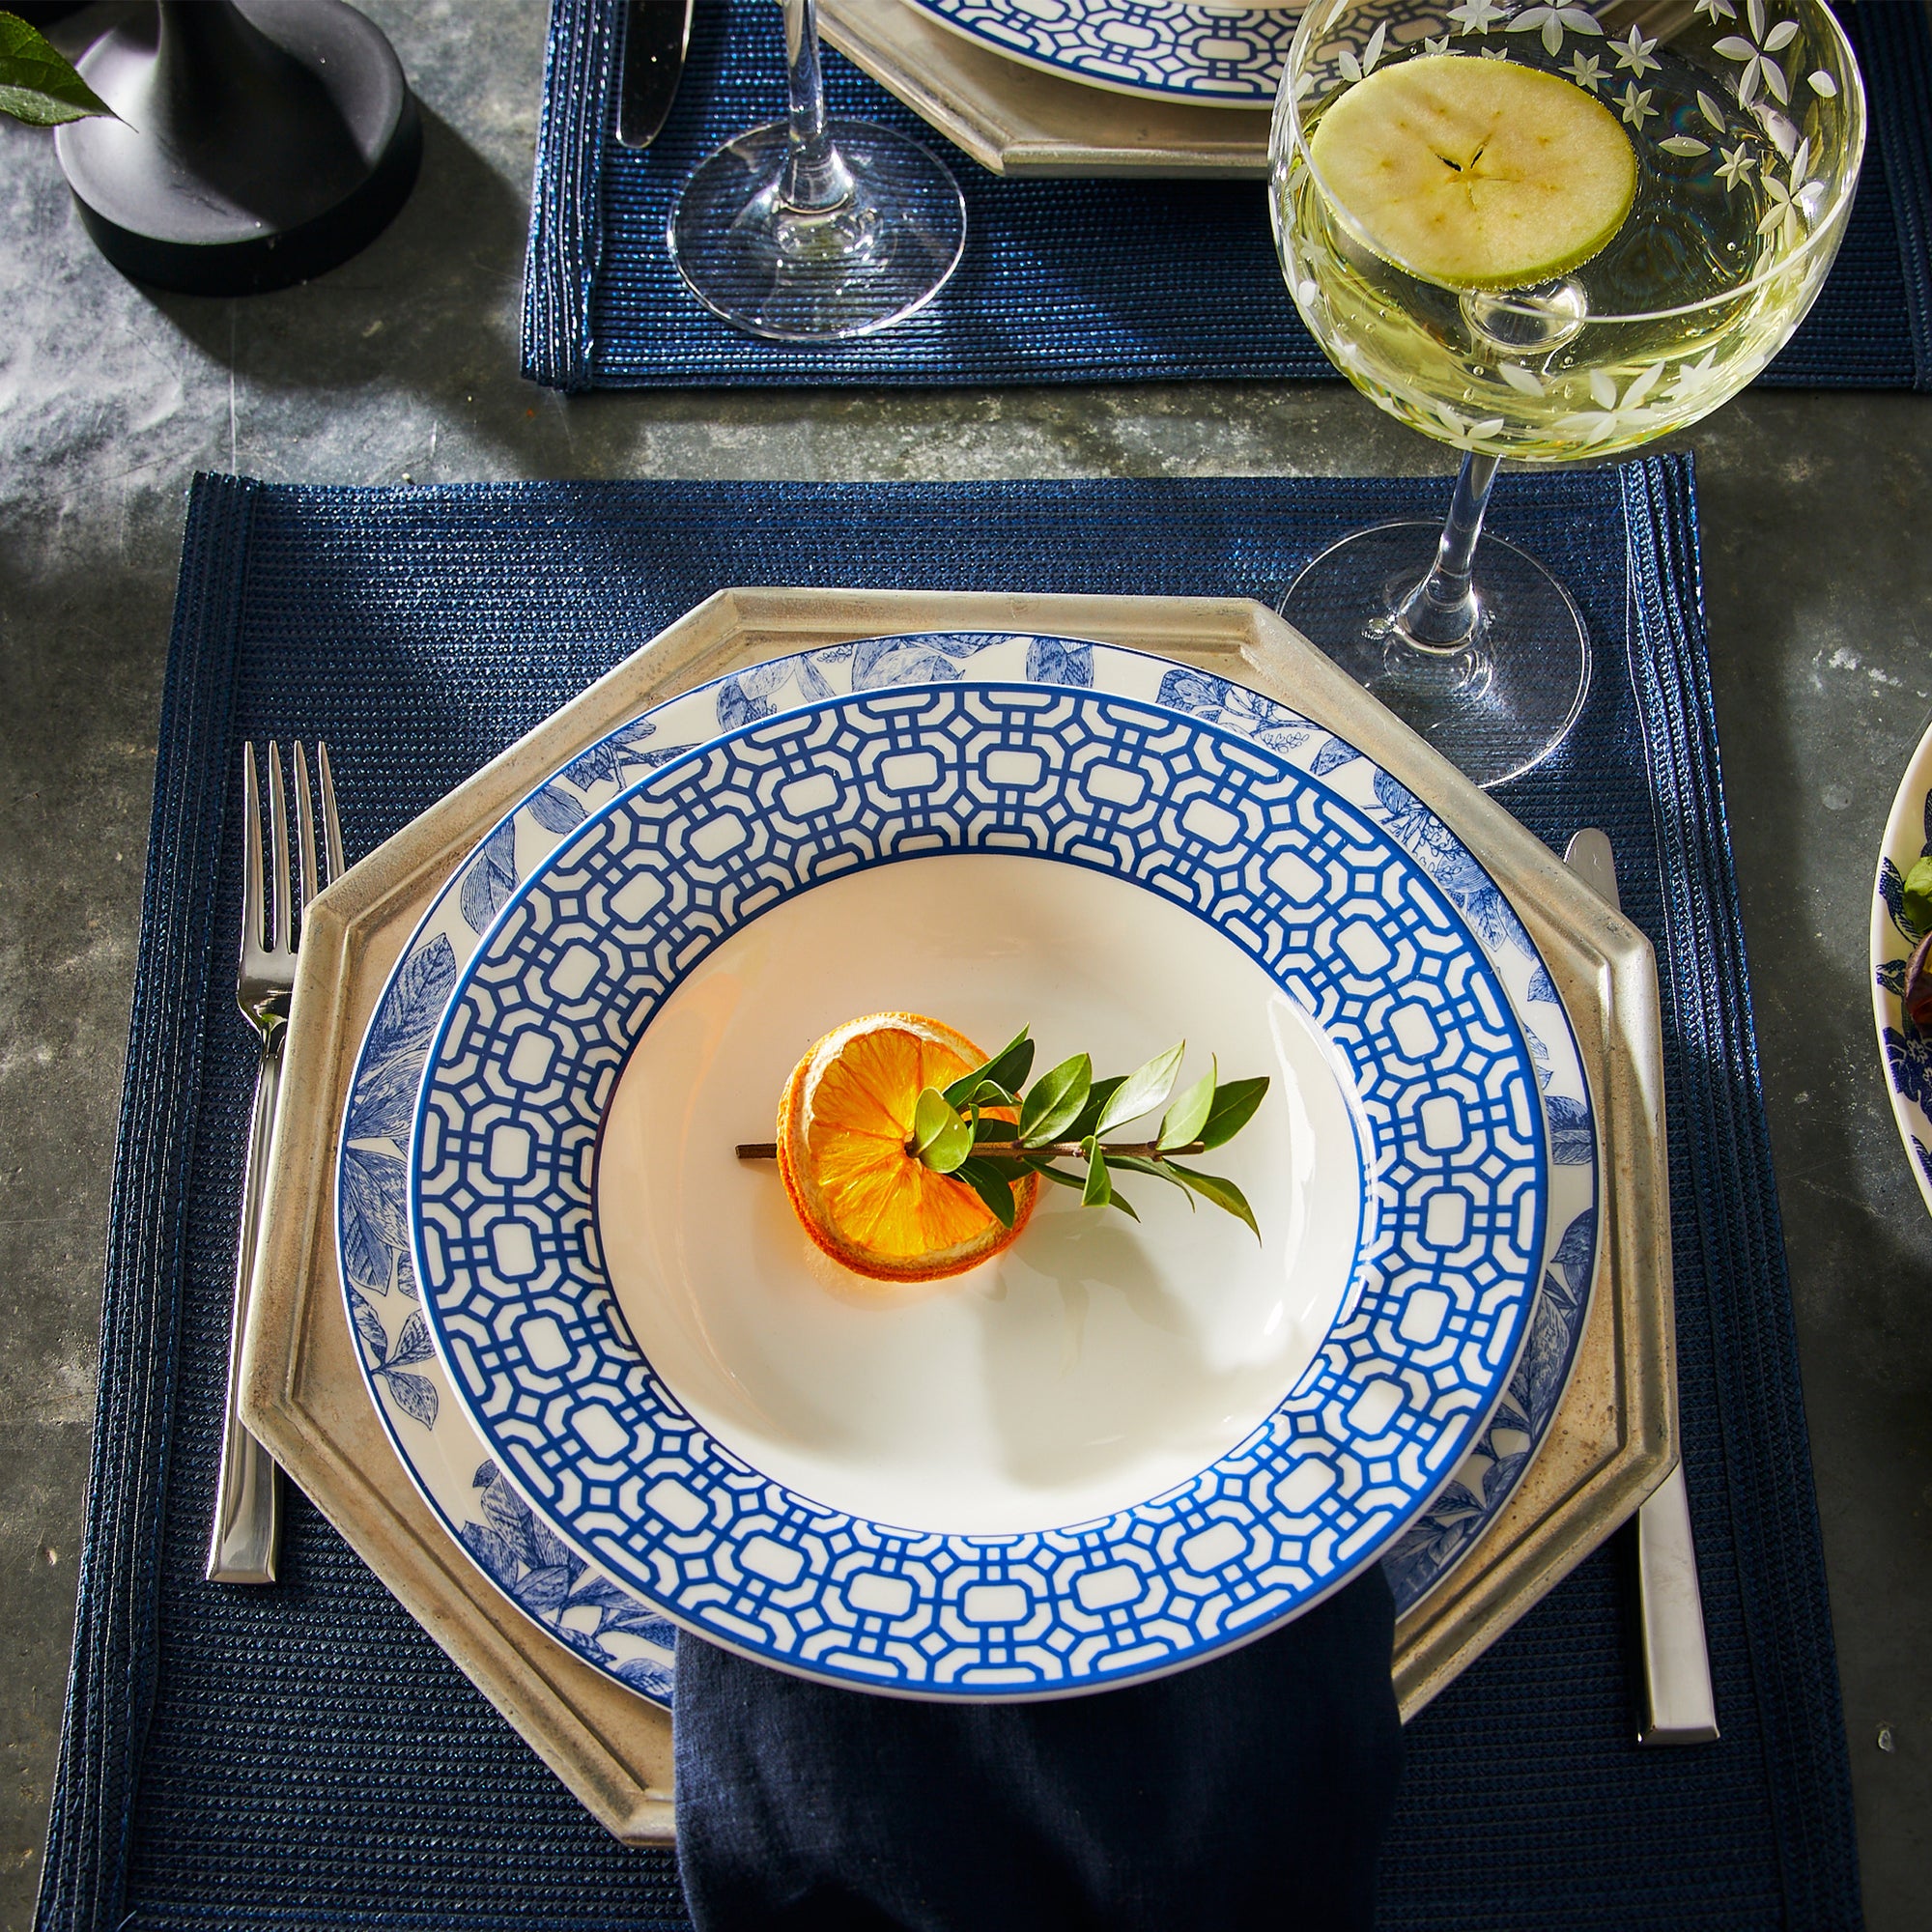 Newport Garden Gate Rimmed Soup Bowl in Blue and White Porcelain on an Arbor Blue Dinner plate from Caskata.